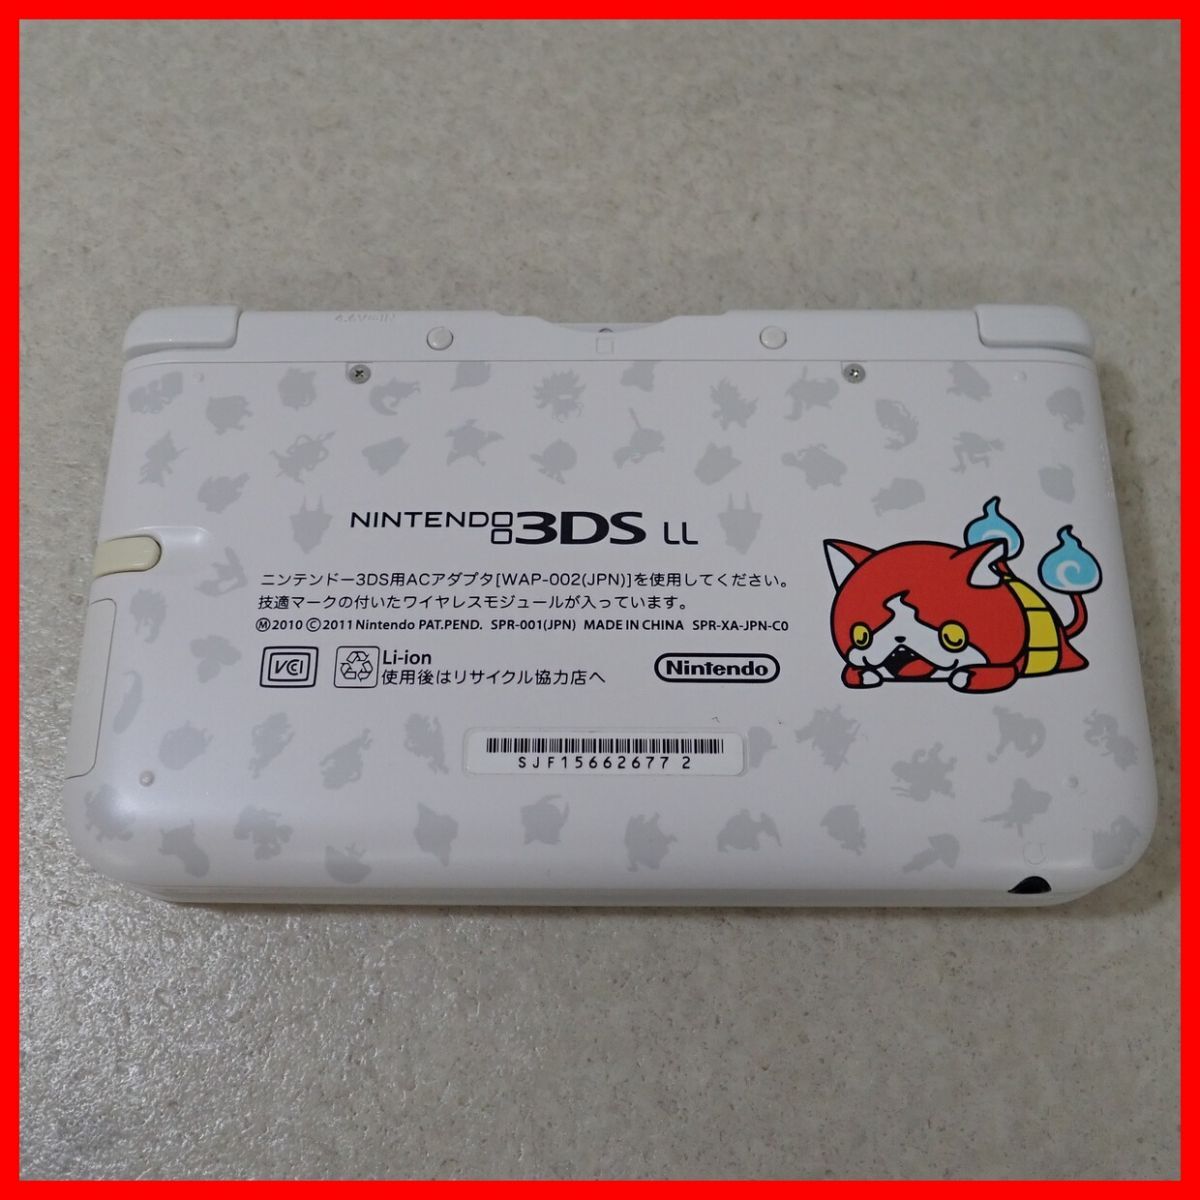  operation goods Nintendo 3DSLL Yo-kai Watch jibanyan pack body SPR-001 + AC adapter Nintendo nintendo [10